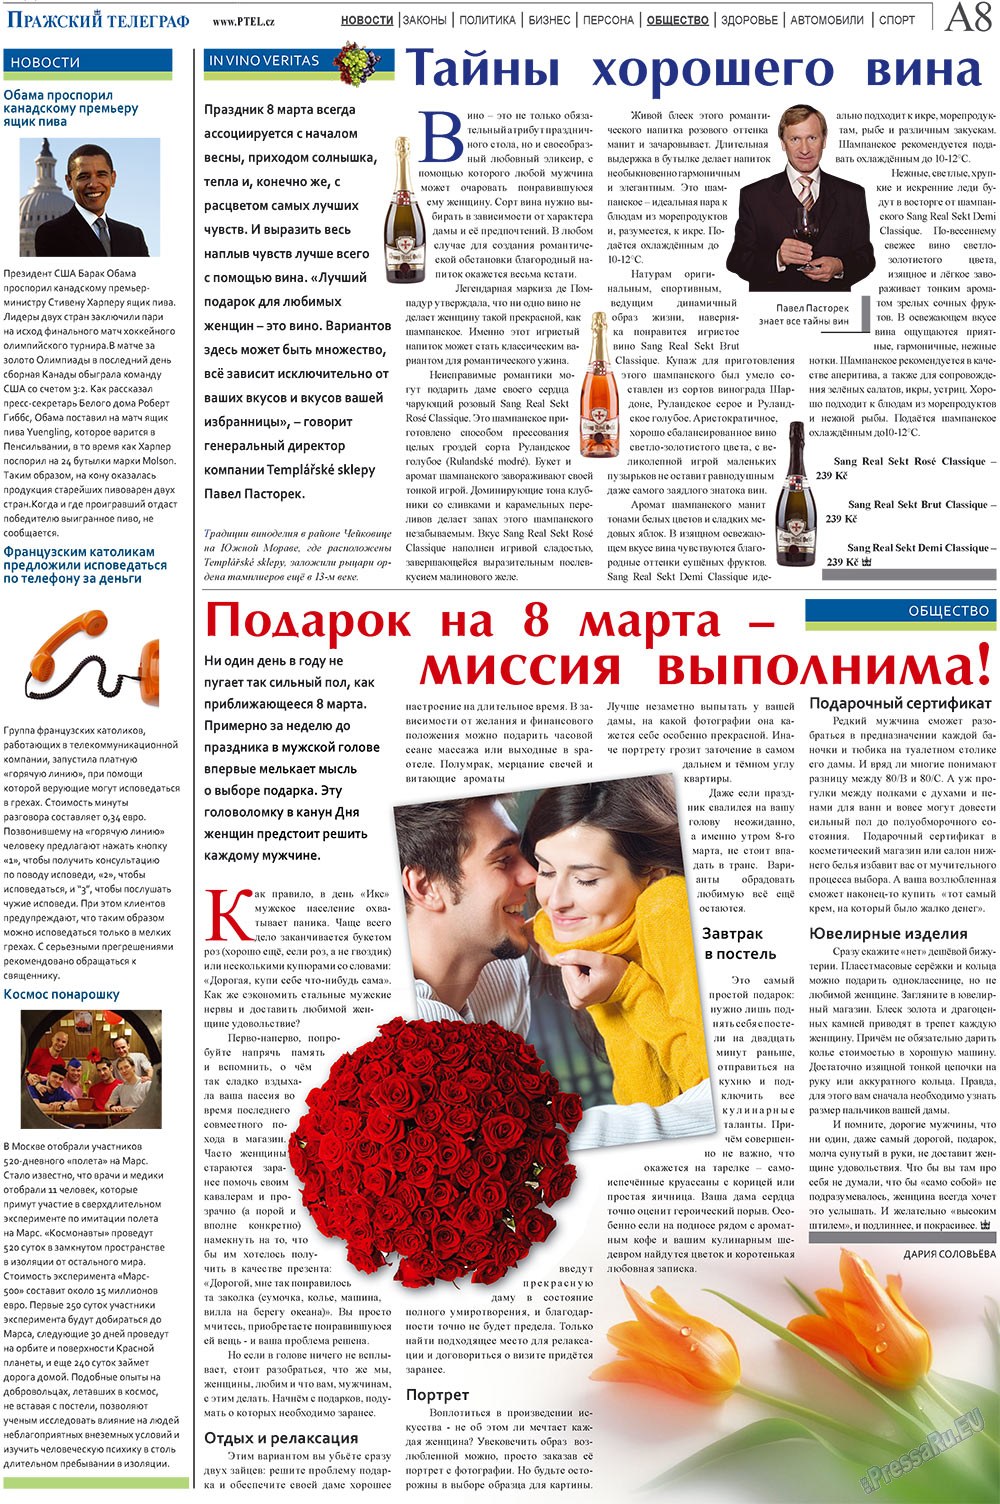 Пражский телеграф, газета. 2010 №9 стр.8